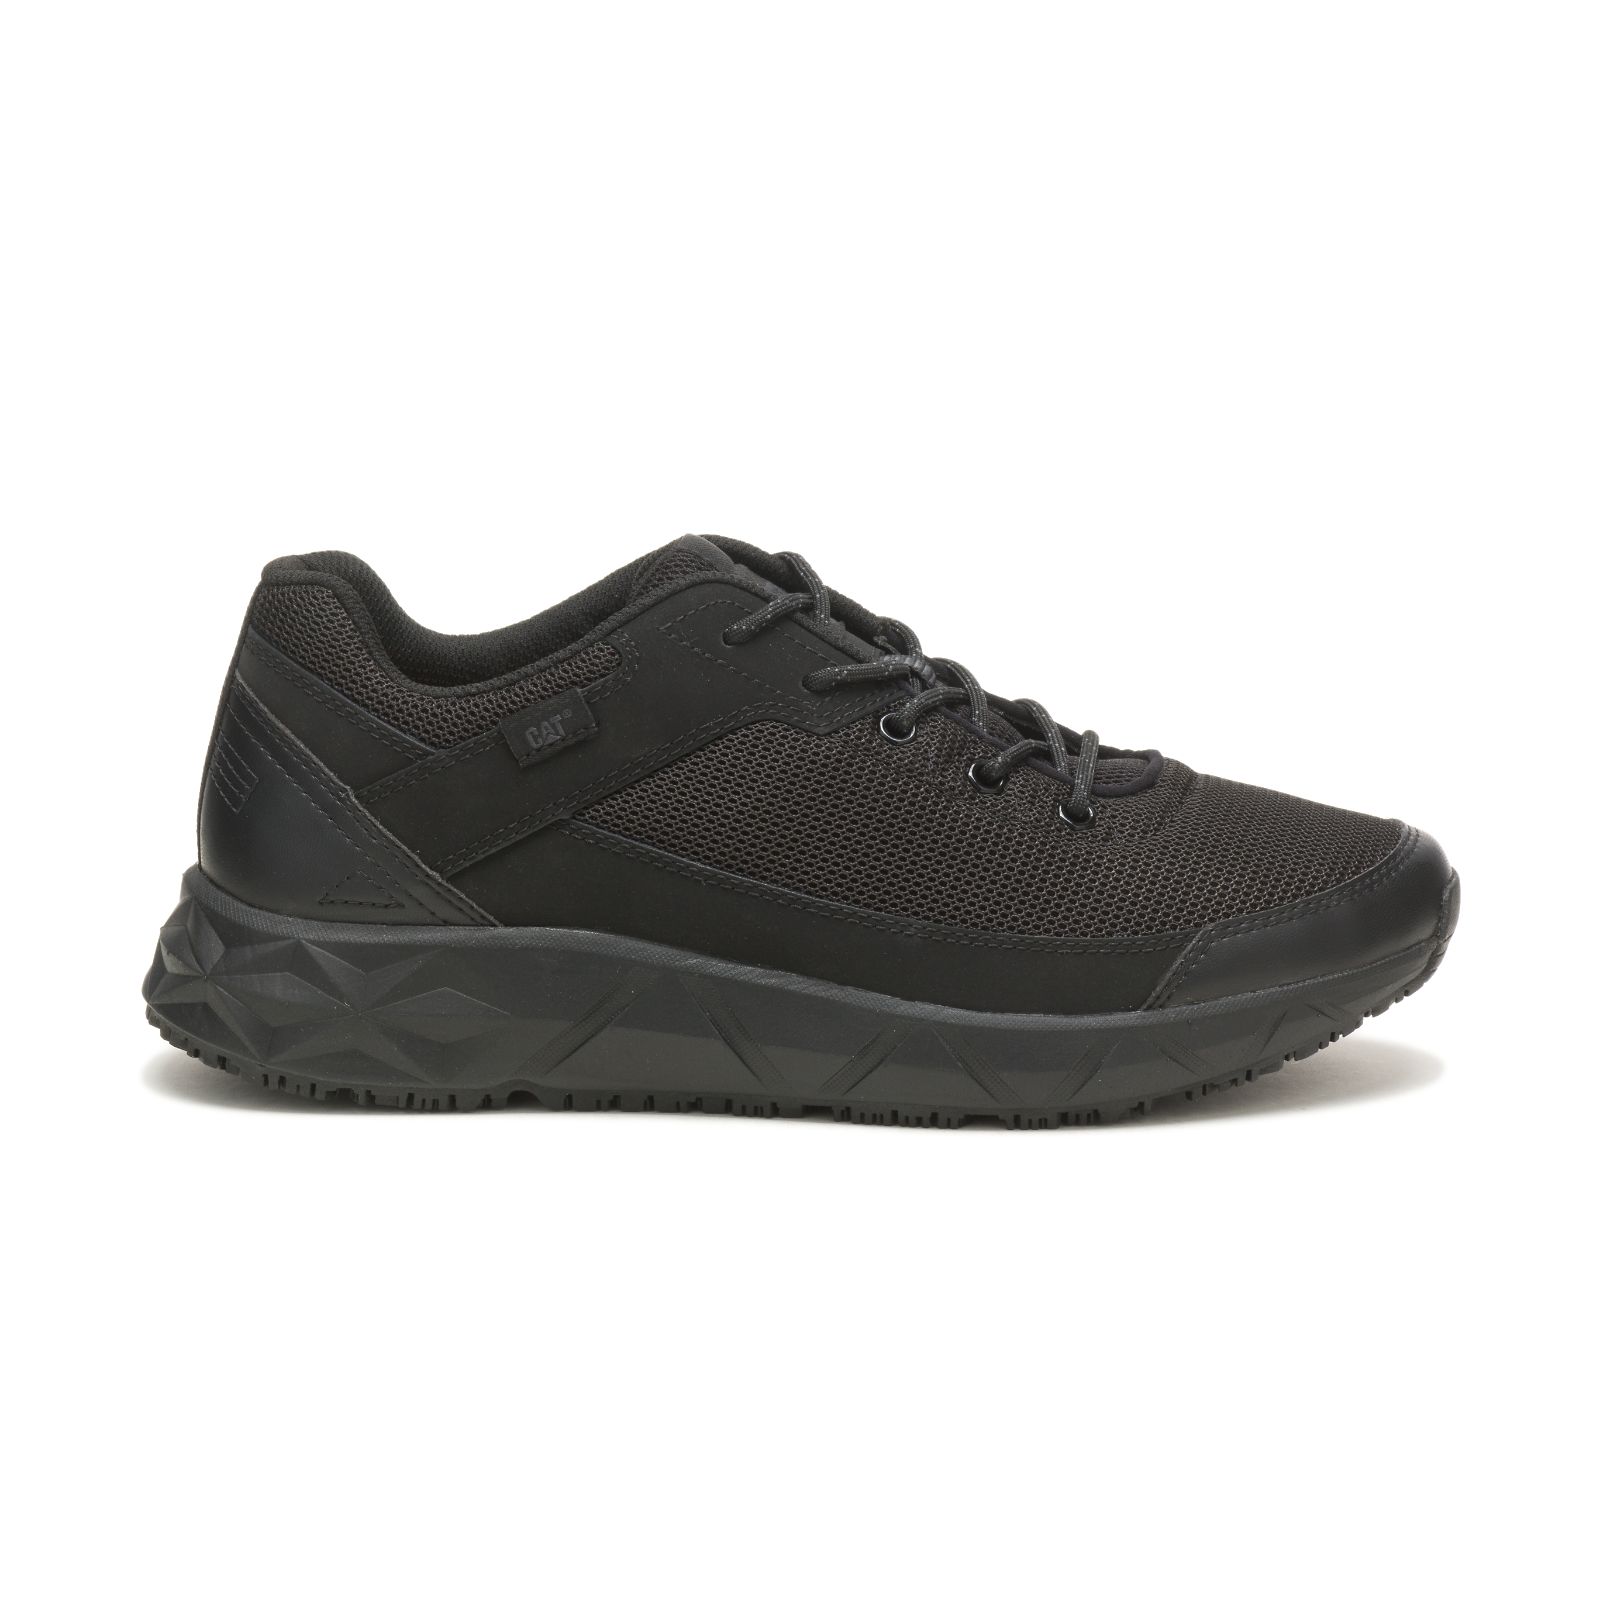 Caterpillar Shoes Sale - Caterpillar Prorush Speed Fx Mens Work Shoes Black (270853-OXL)